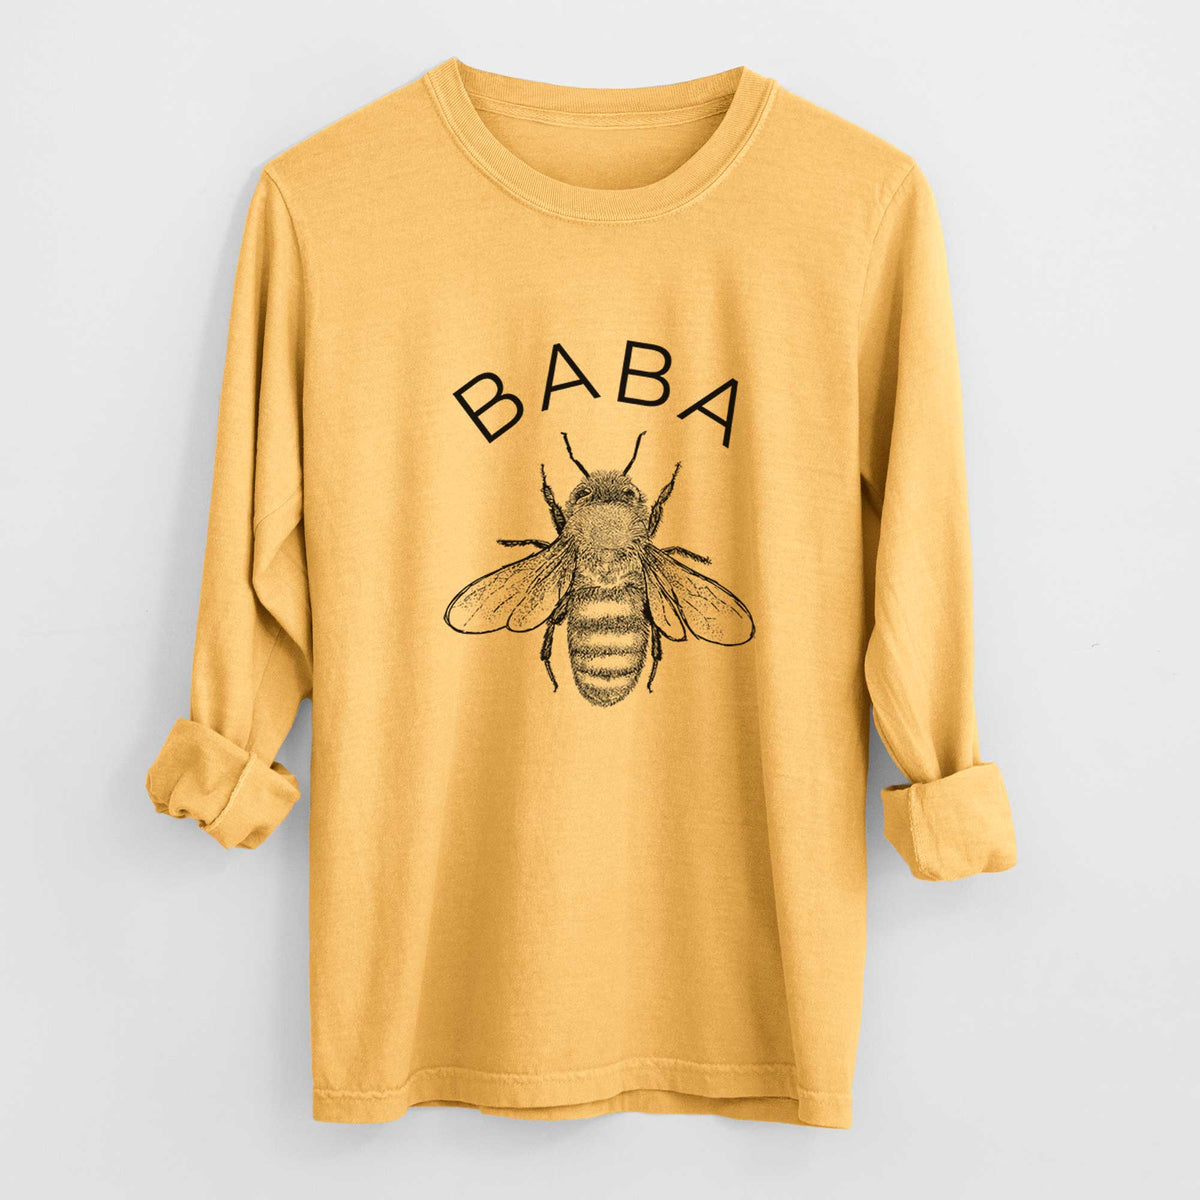 Baba Bee - Heavyweight 100% Cotton Long Sleeve